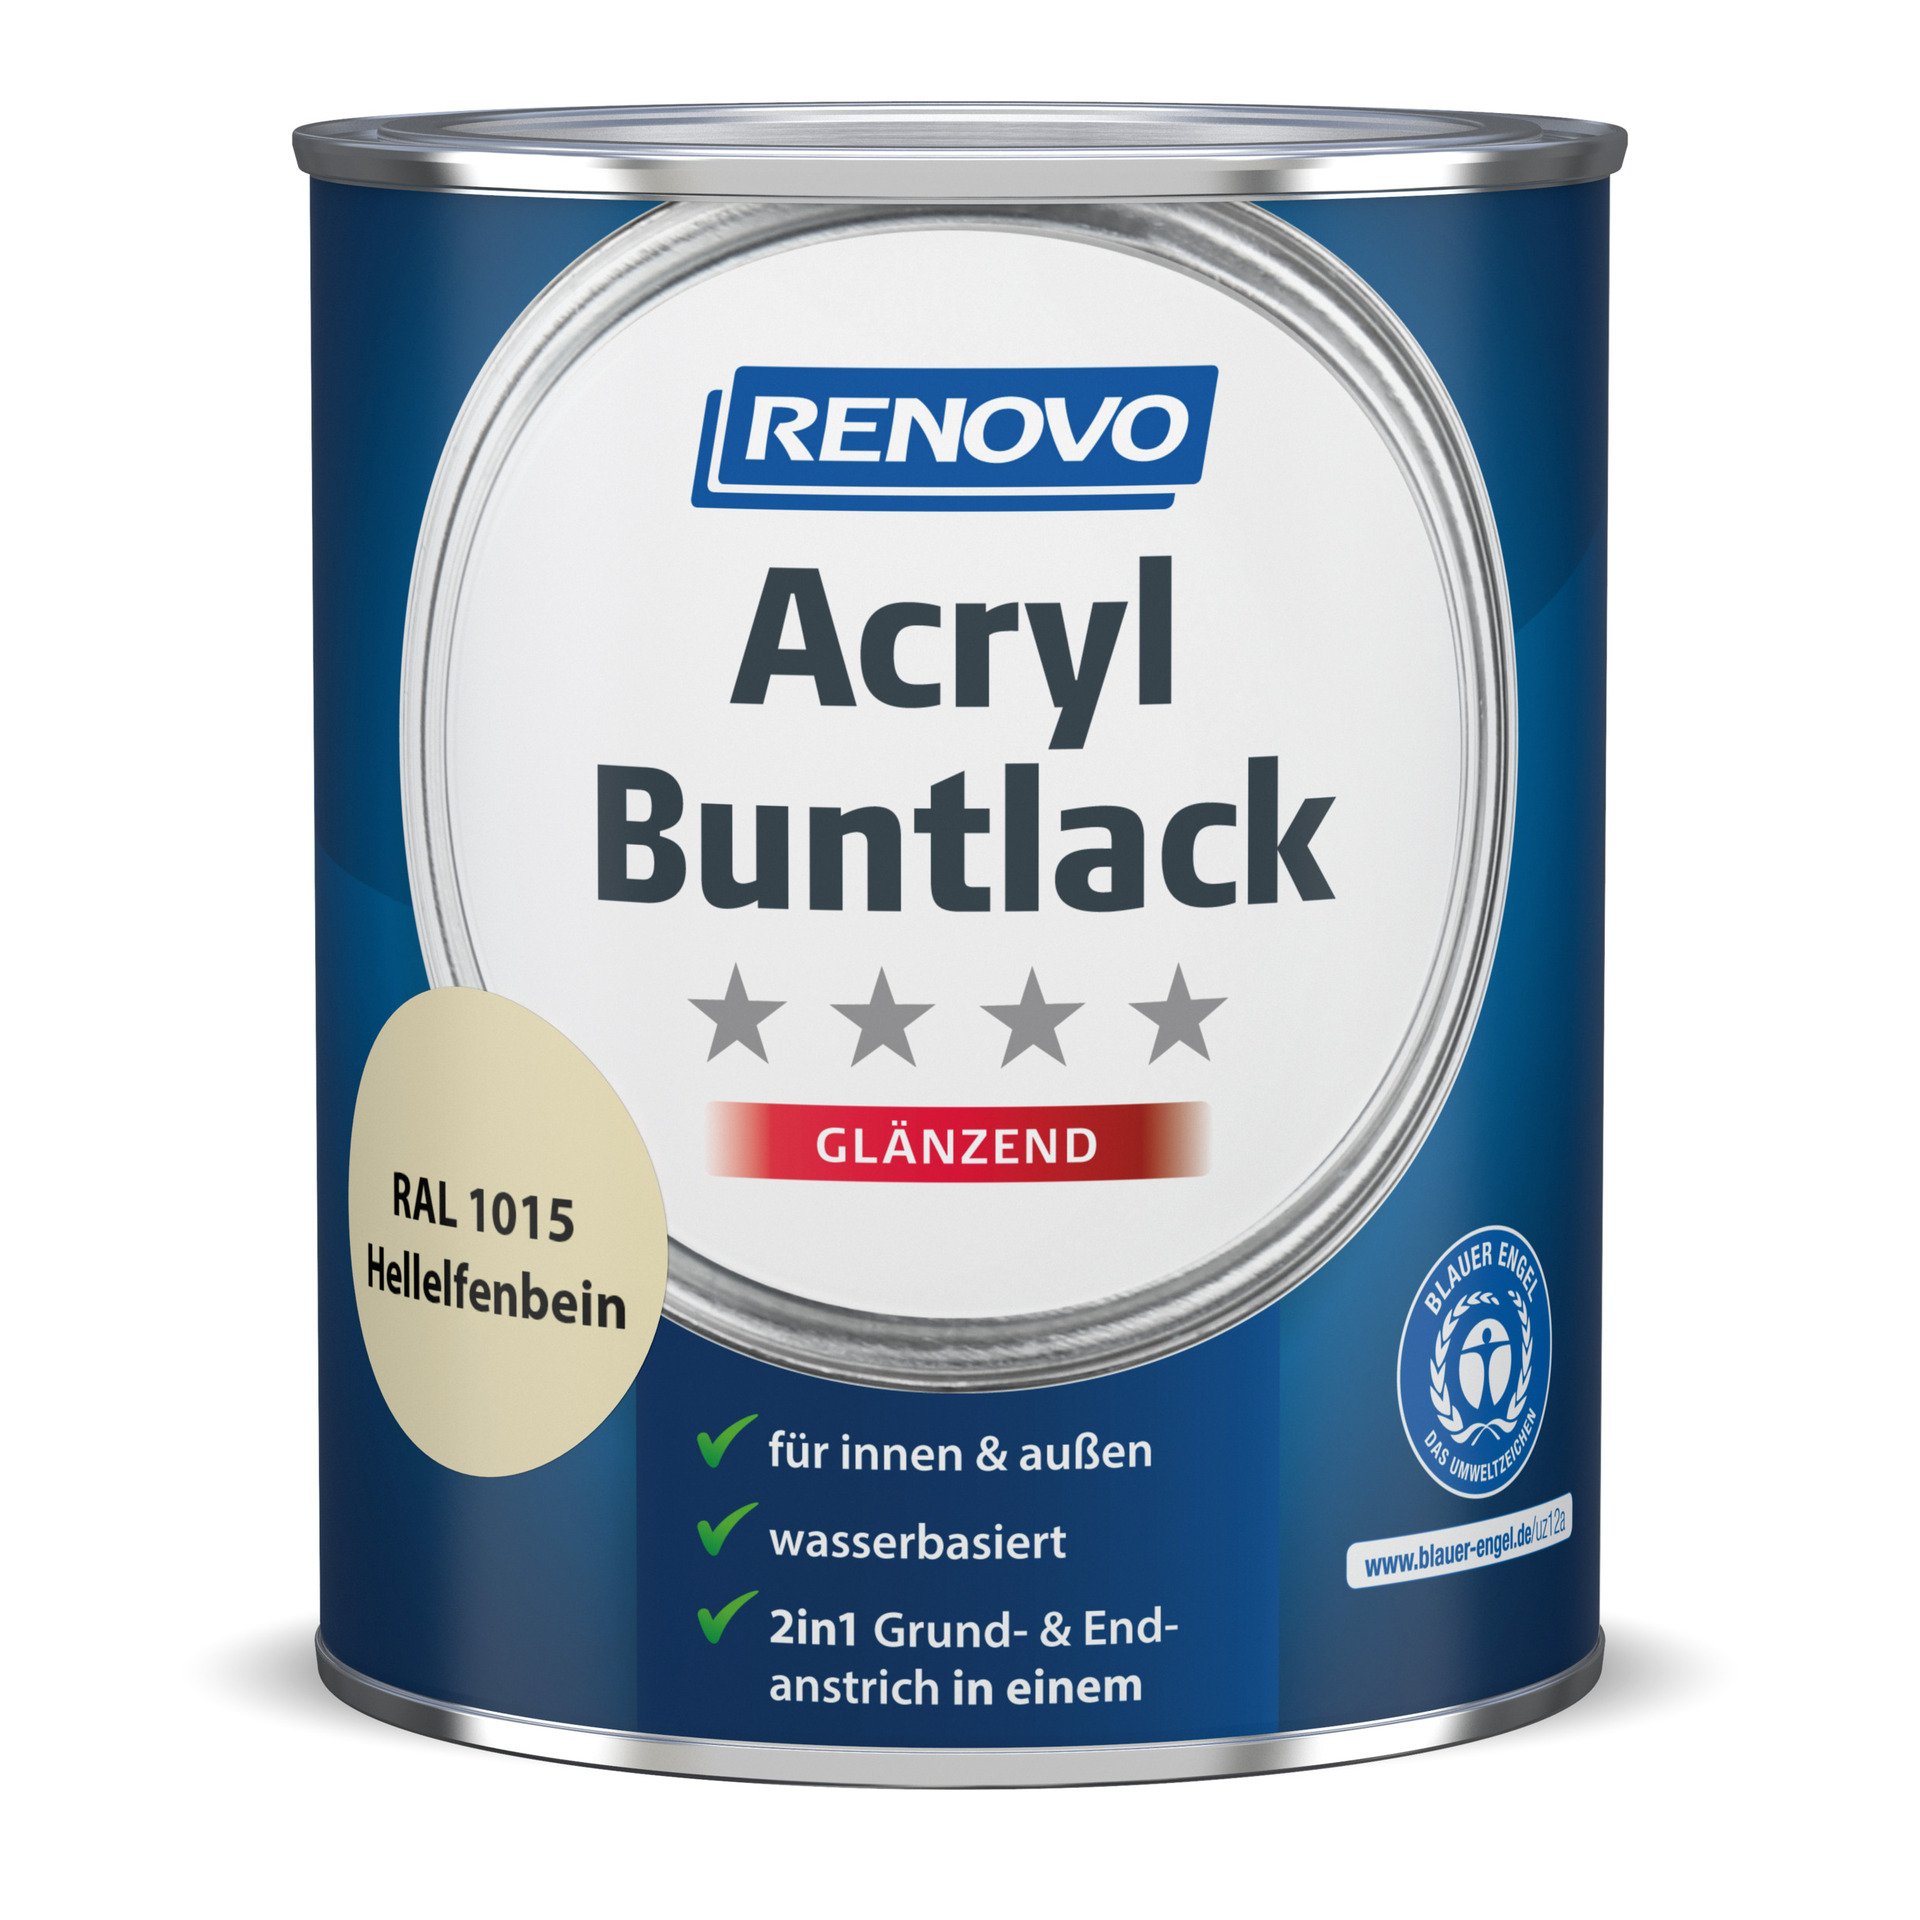 Renovo Acryl Buntlack